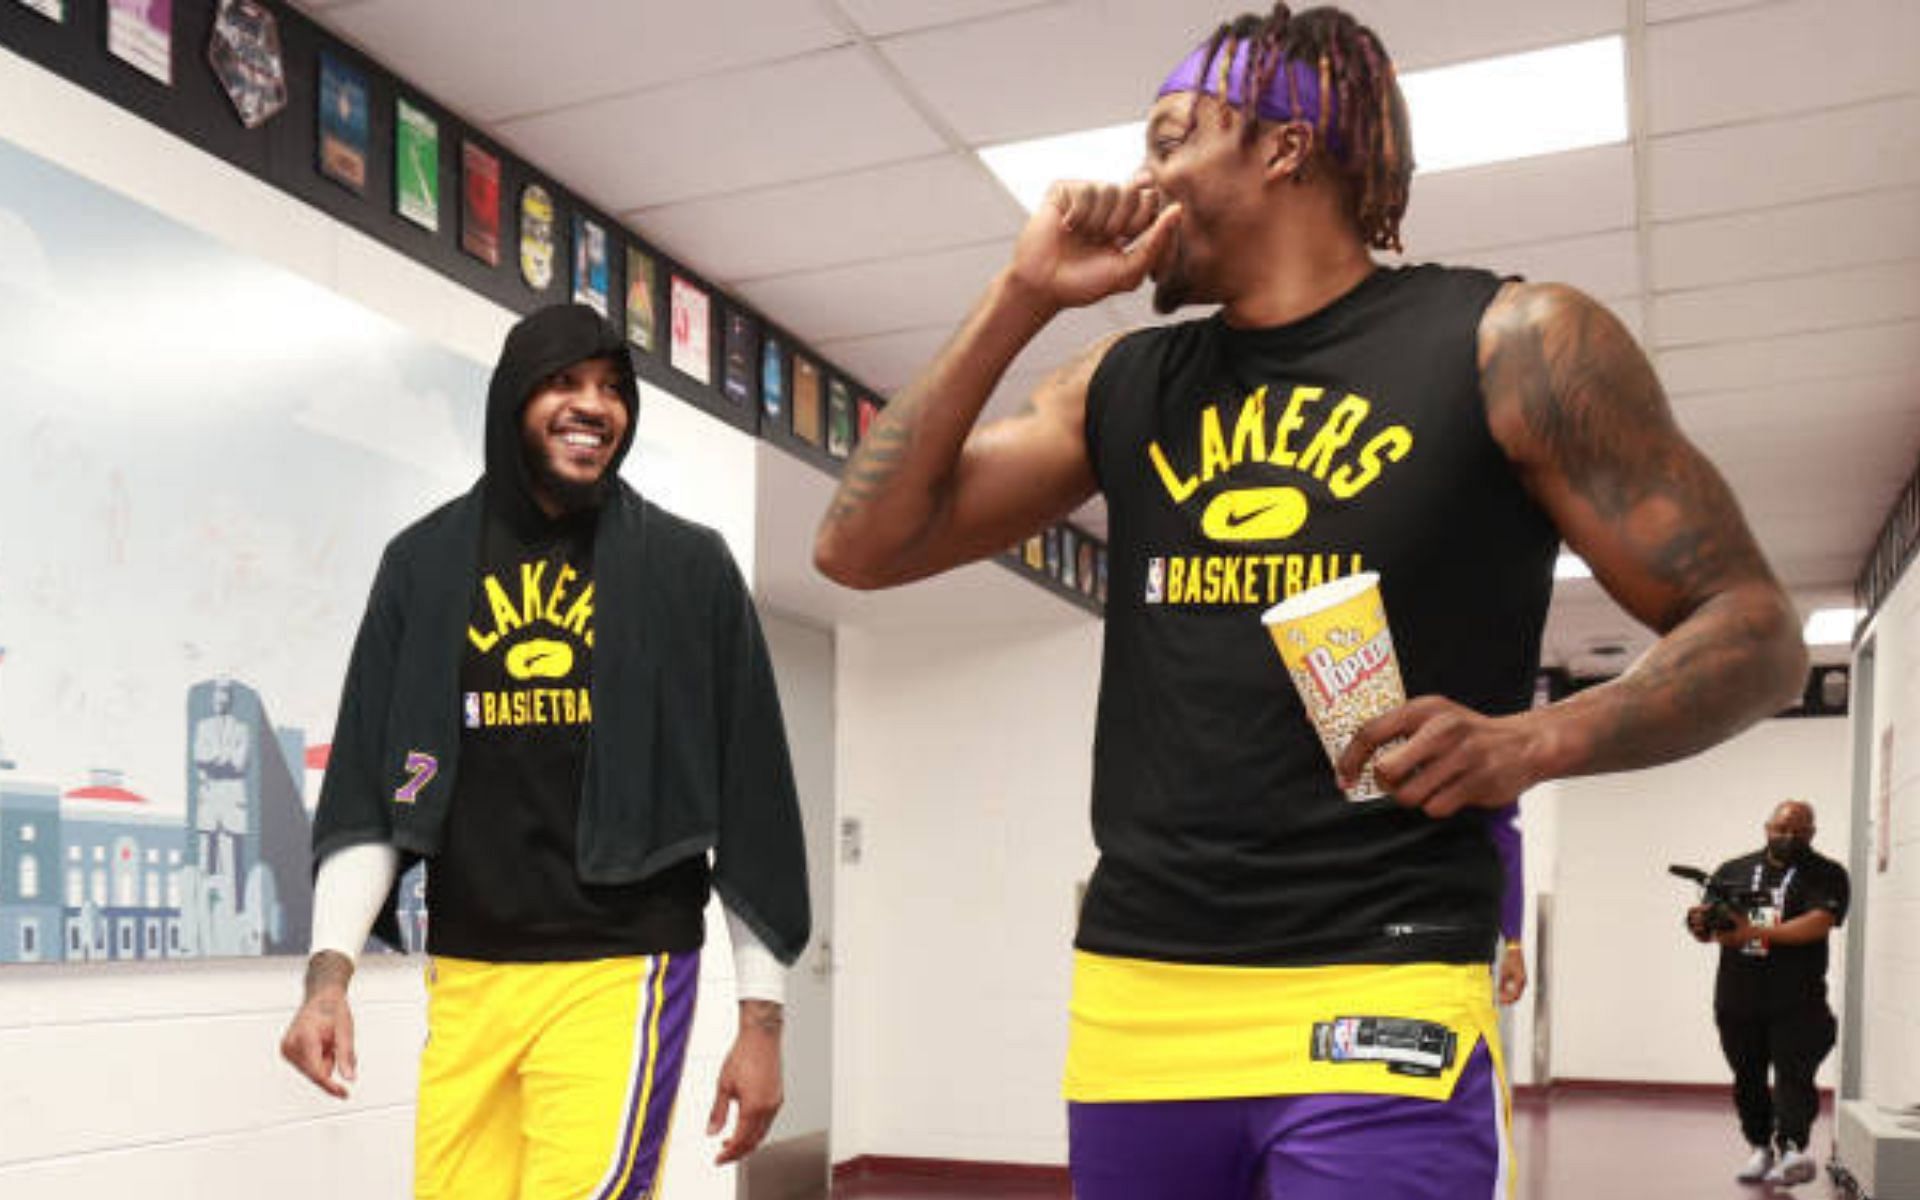 Lakers Rumors: Dwight Howard Against NBA's Plan For Return, Avery